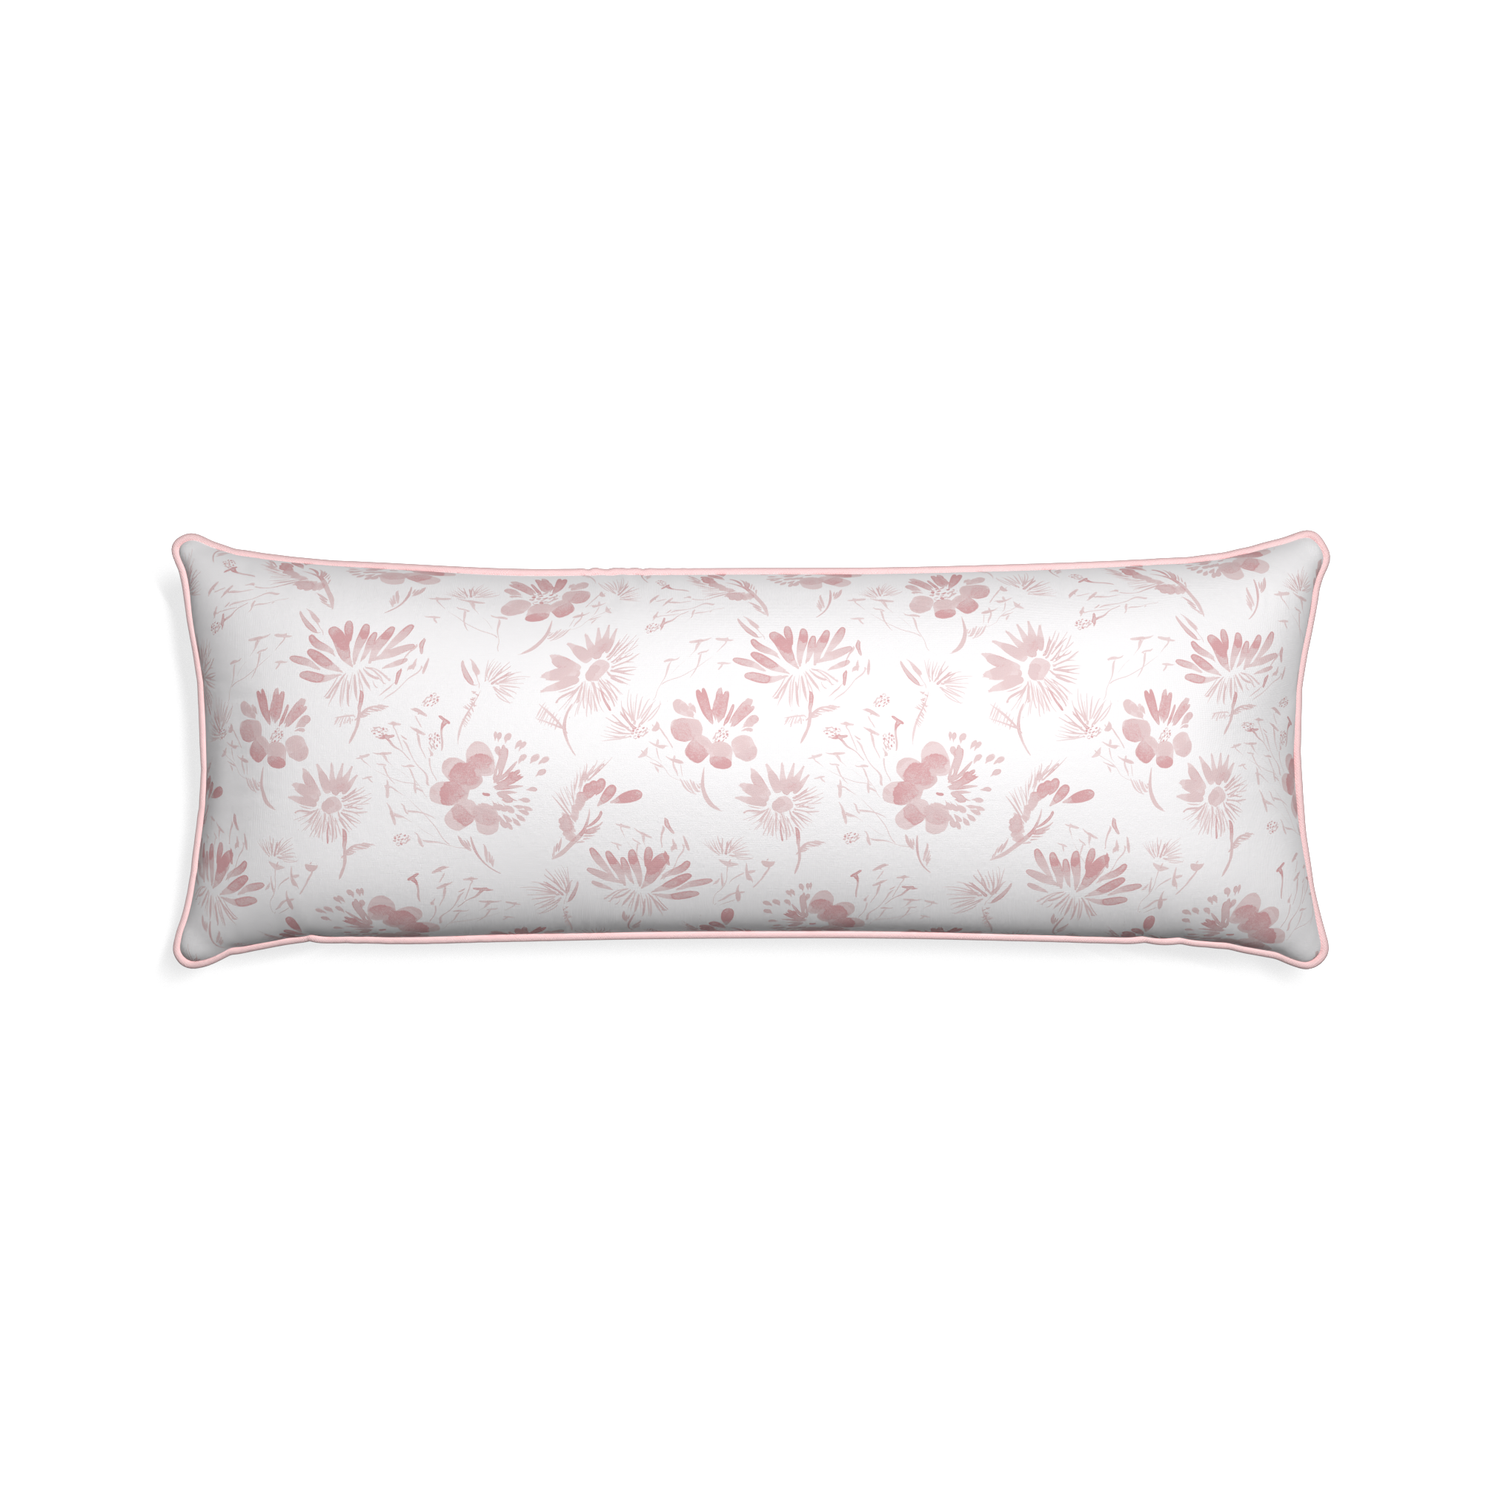 Xl-lumbar blake custom pillow with petal piping on white background